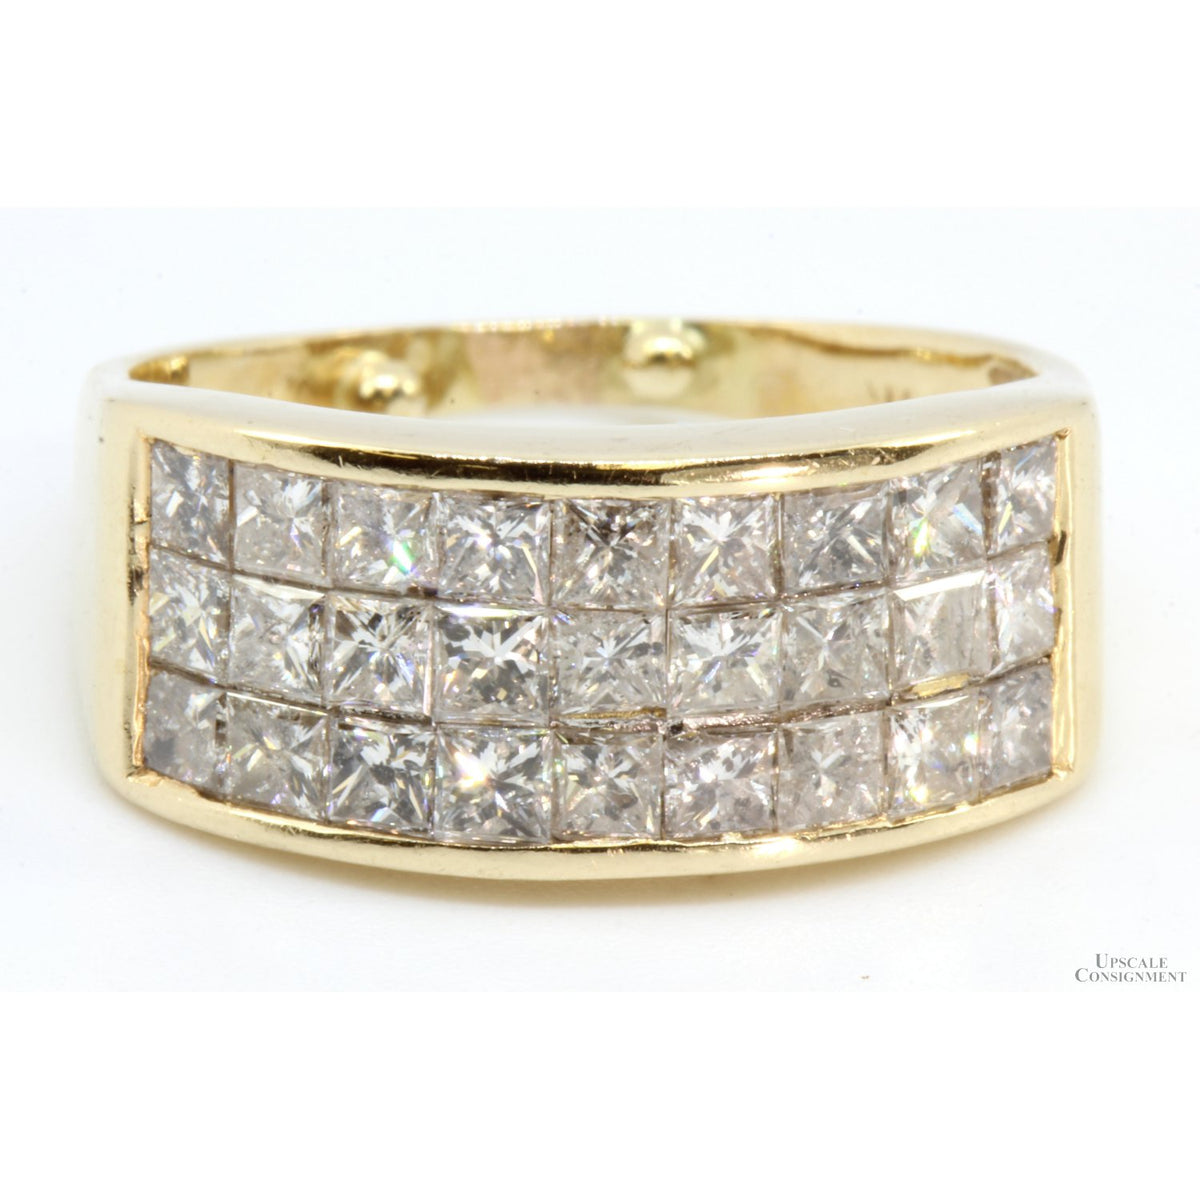 14K Yellow Gold 2.025 ctw Princess Cut Diamond Ring